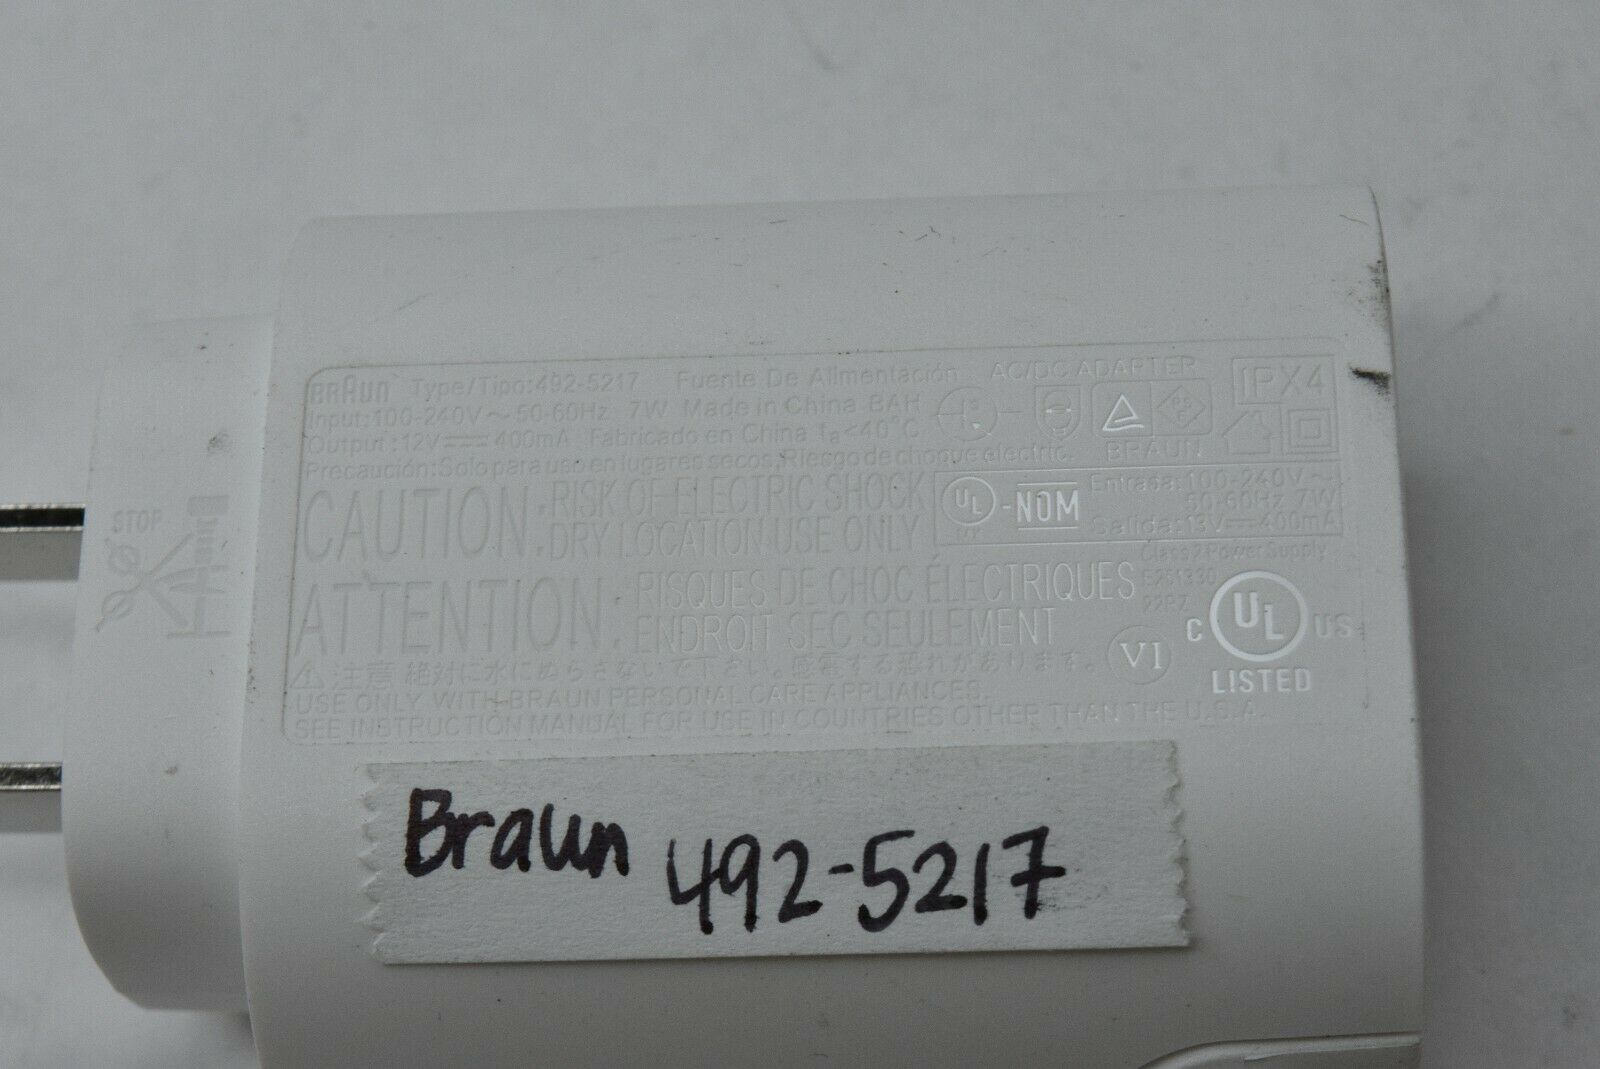 Braun AC/DC Adapter Power Supply Unit 492-5217 12V 400mA Type: AC/DC Adapter Output Voltage: 12 V Brand: Braun Br